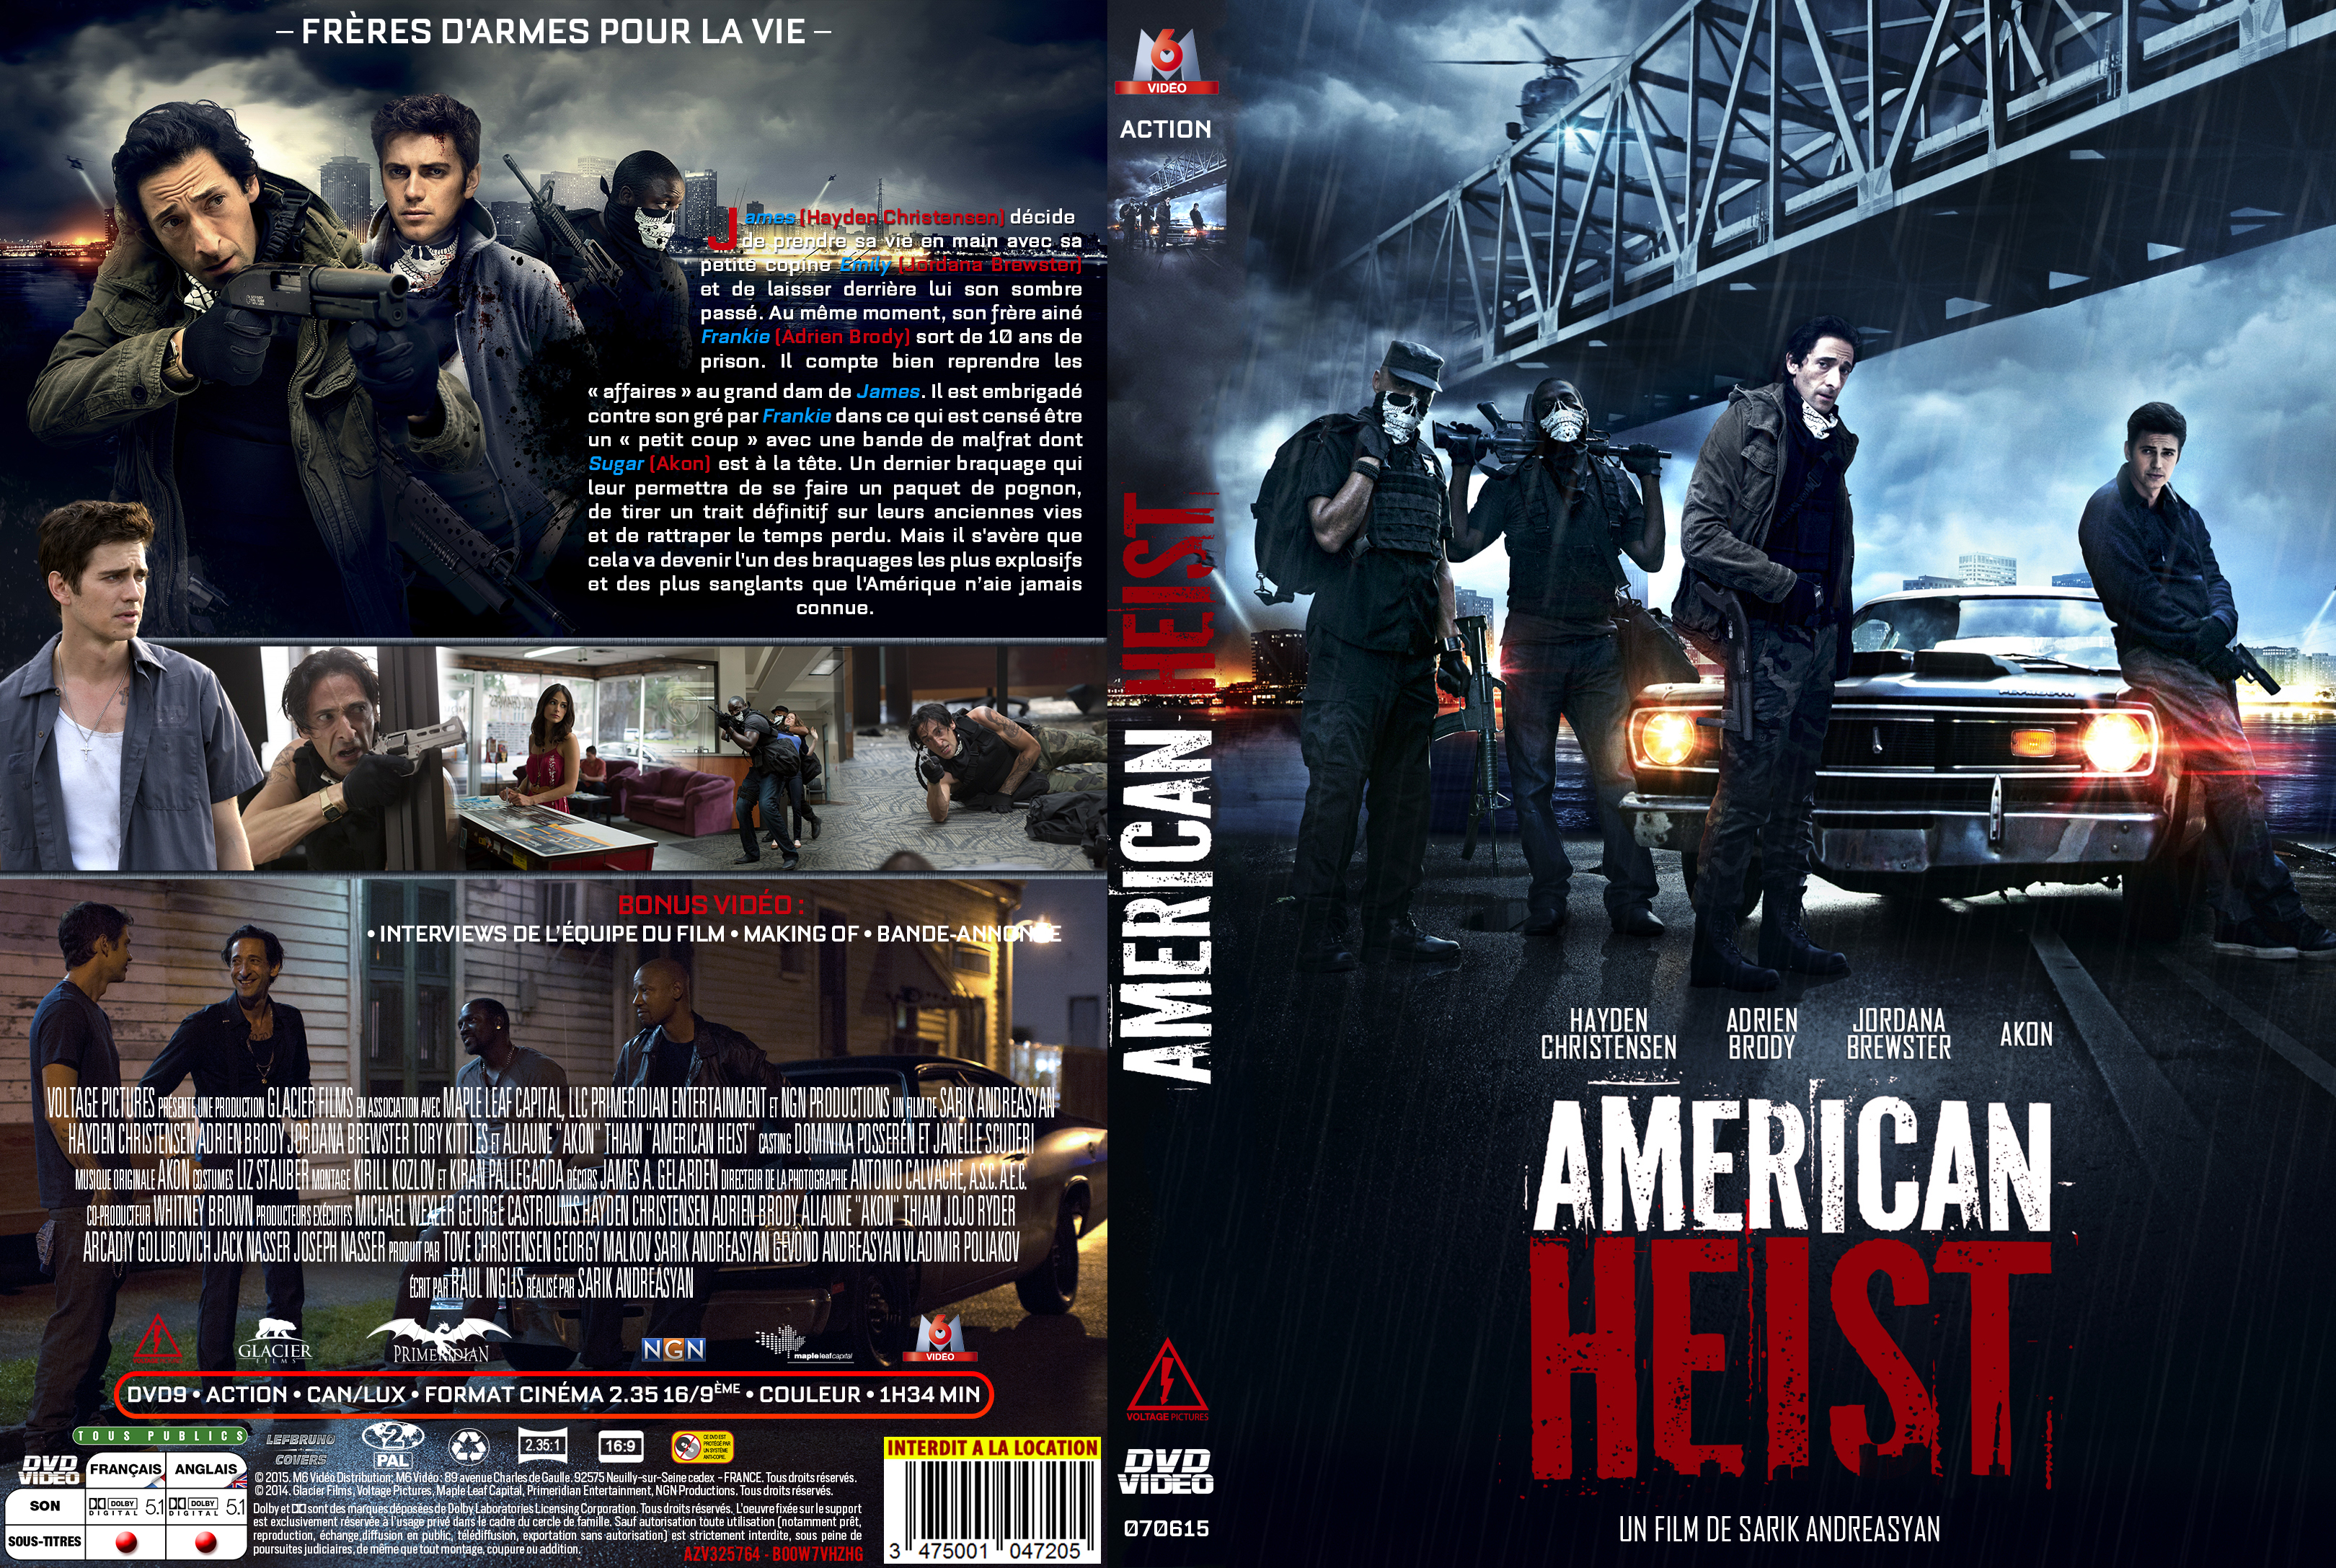 Jaquette DVD American Heist custom